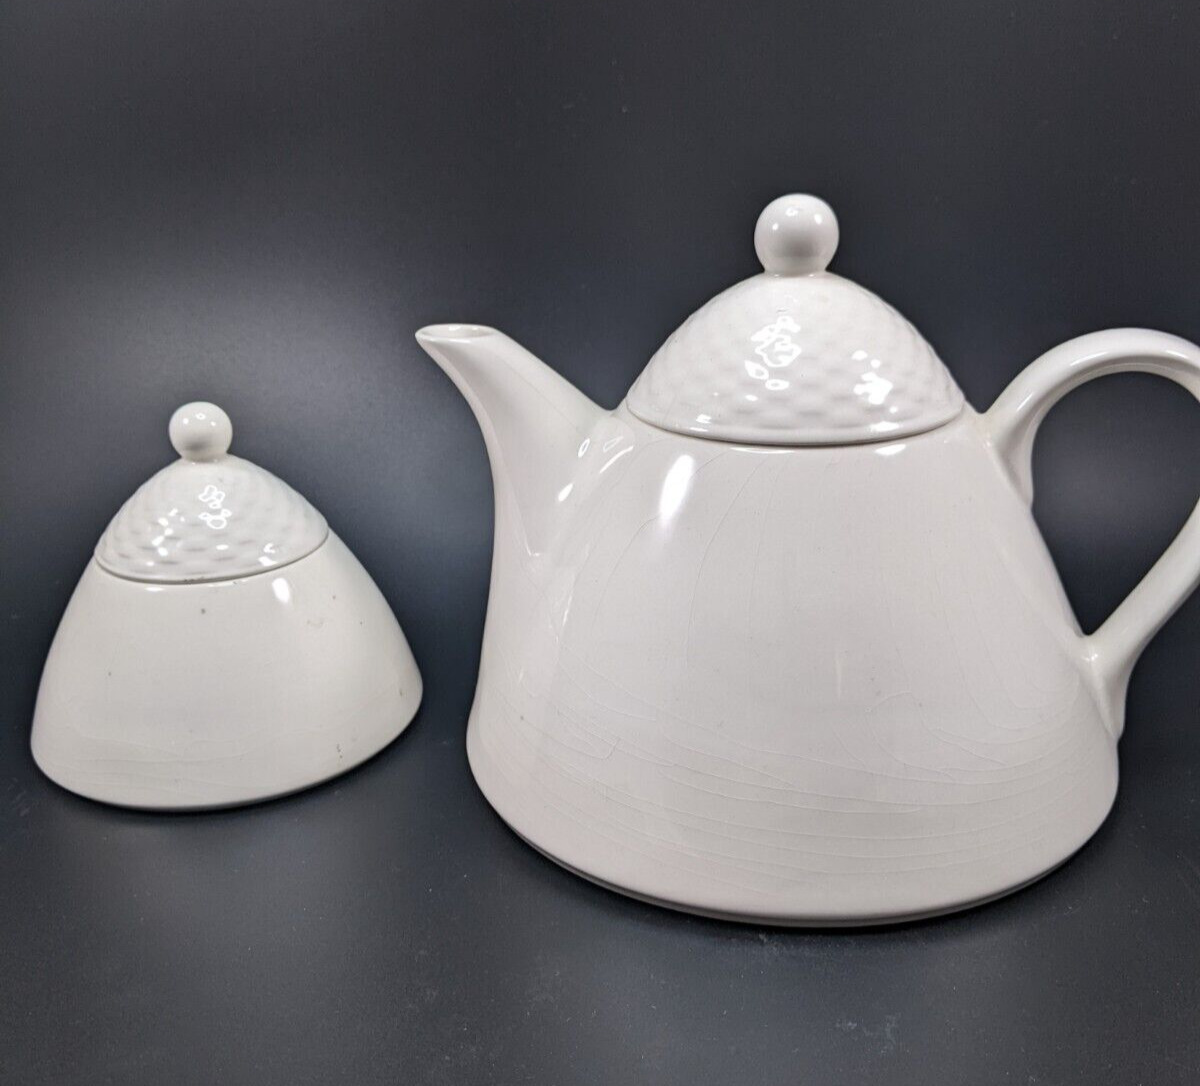 Vintage Pagnossin Treviso Italy White Ceramic Teapot and Sugar Bowl Set